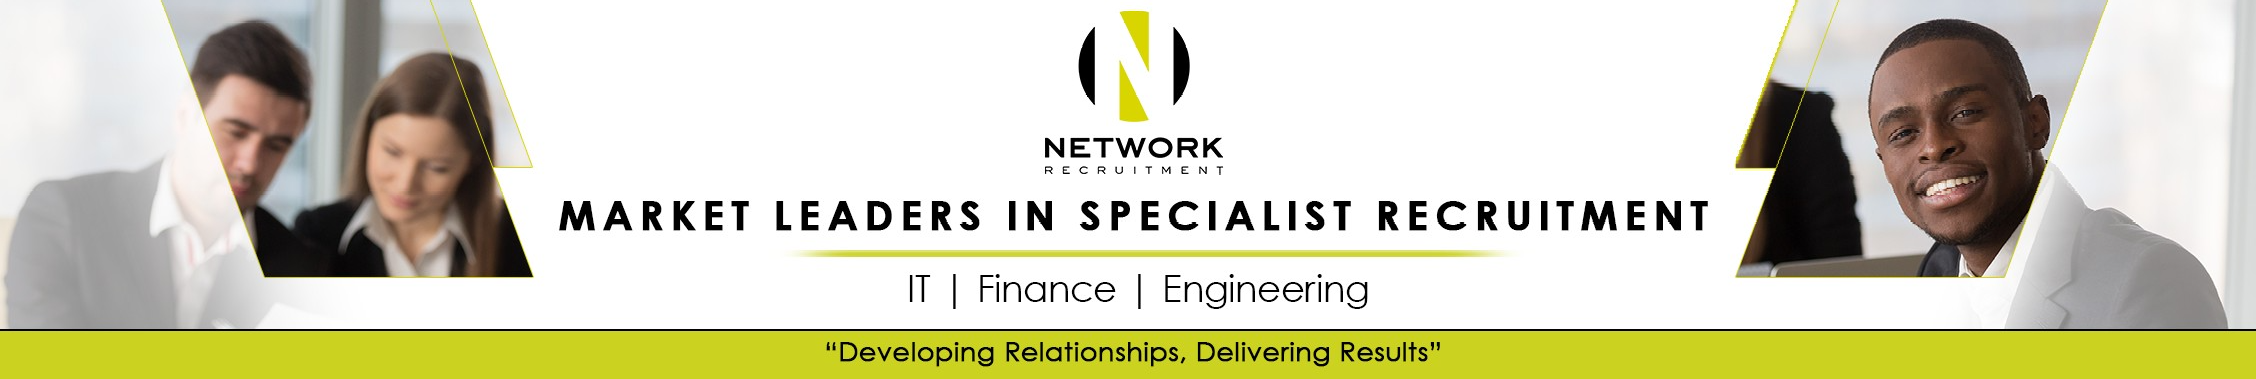 Network Recruitment background